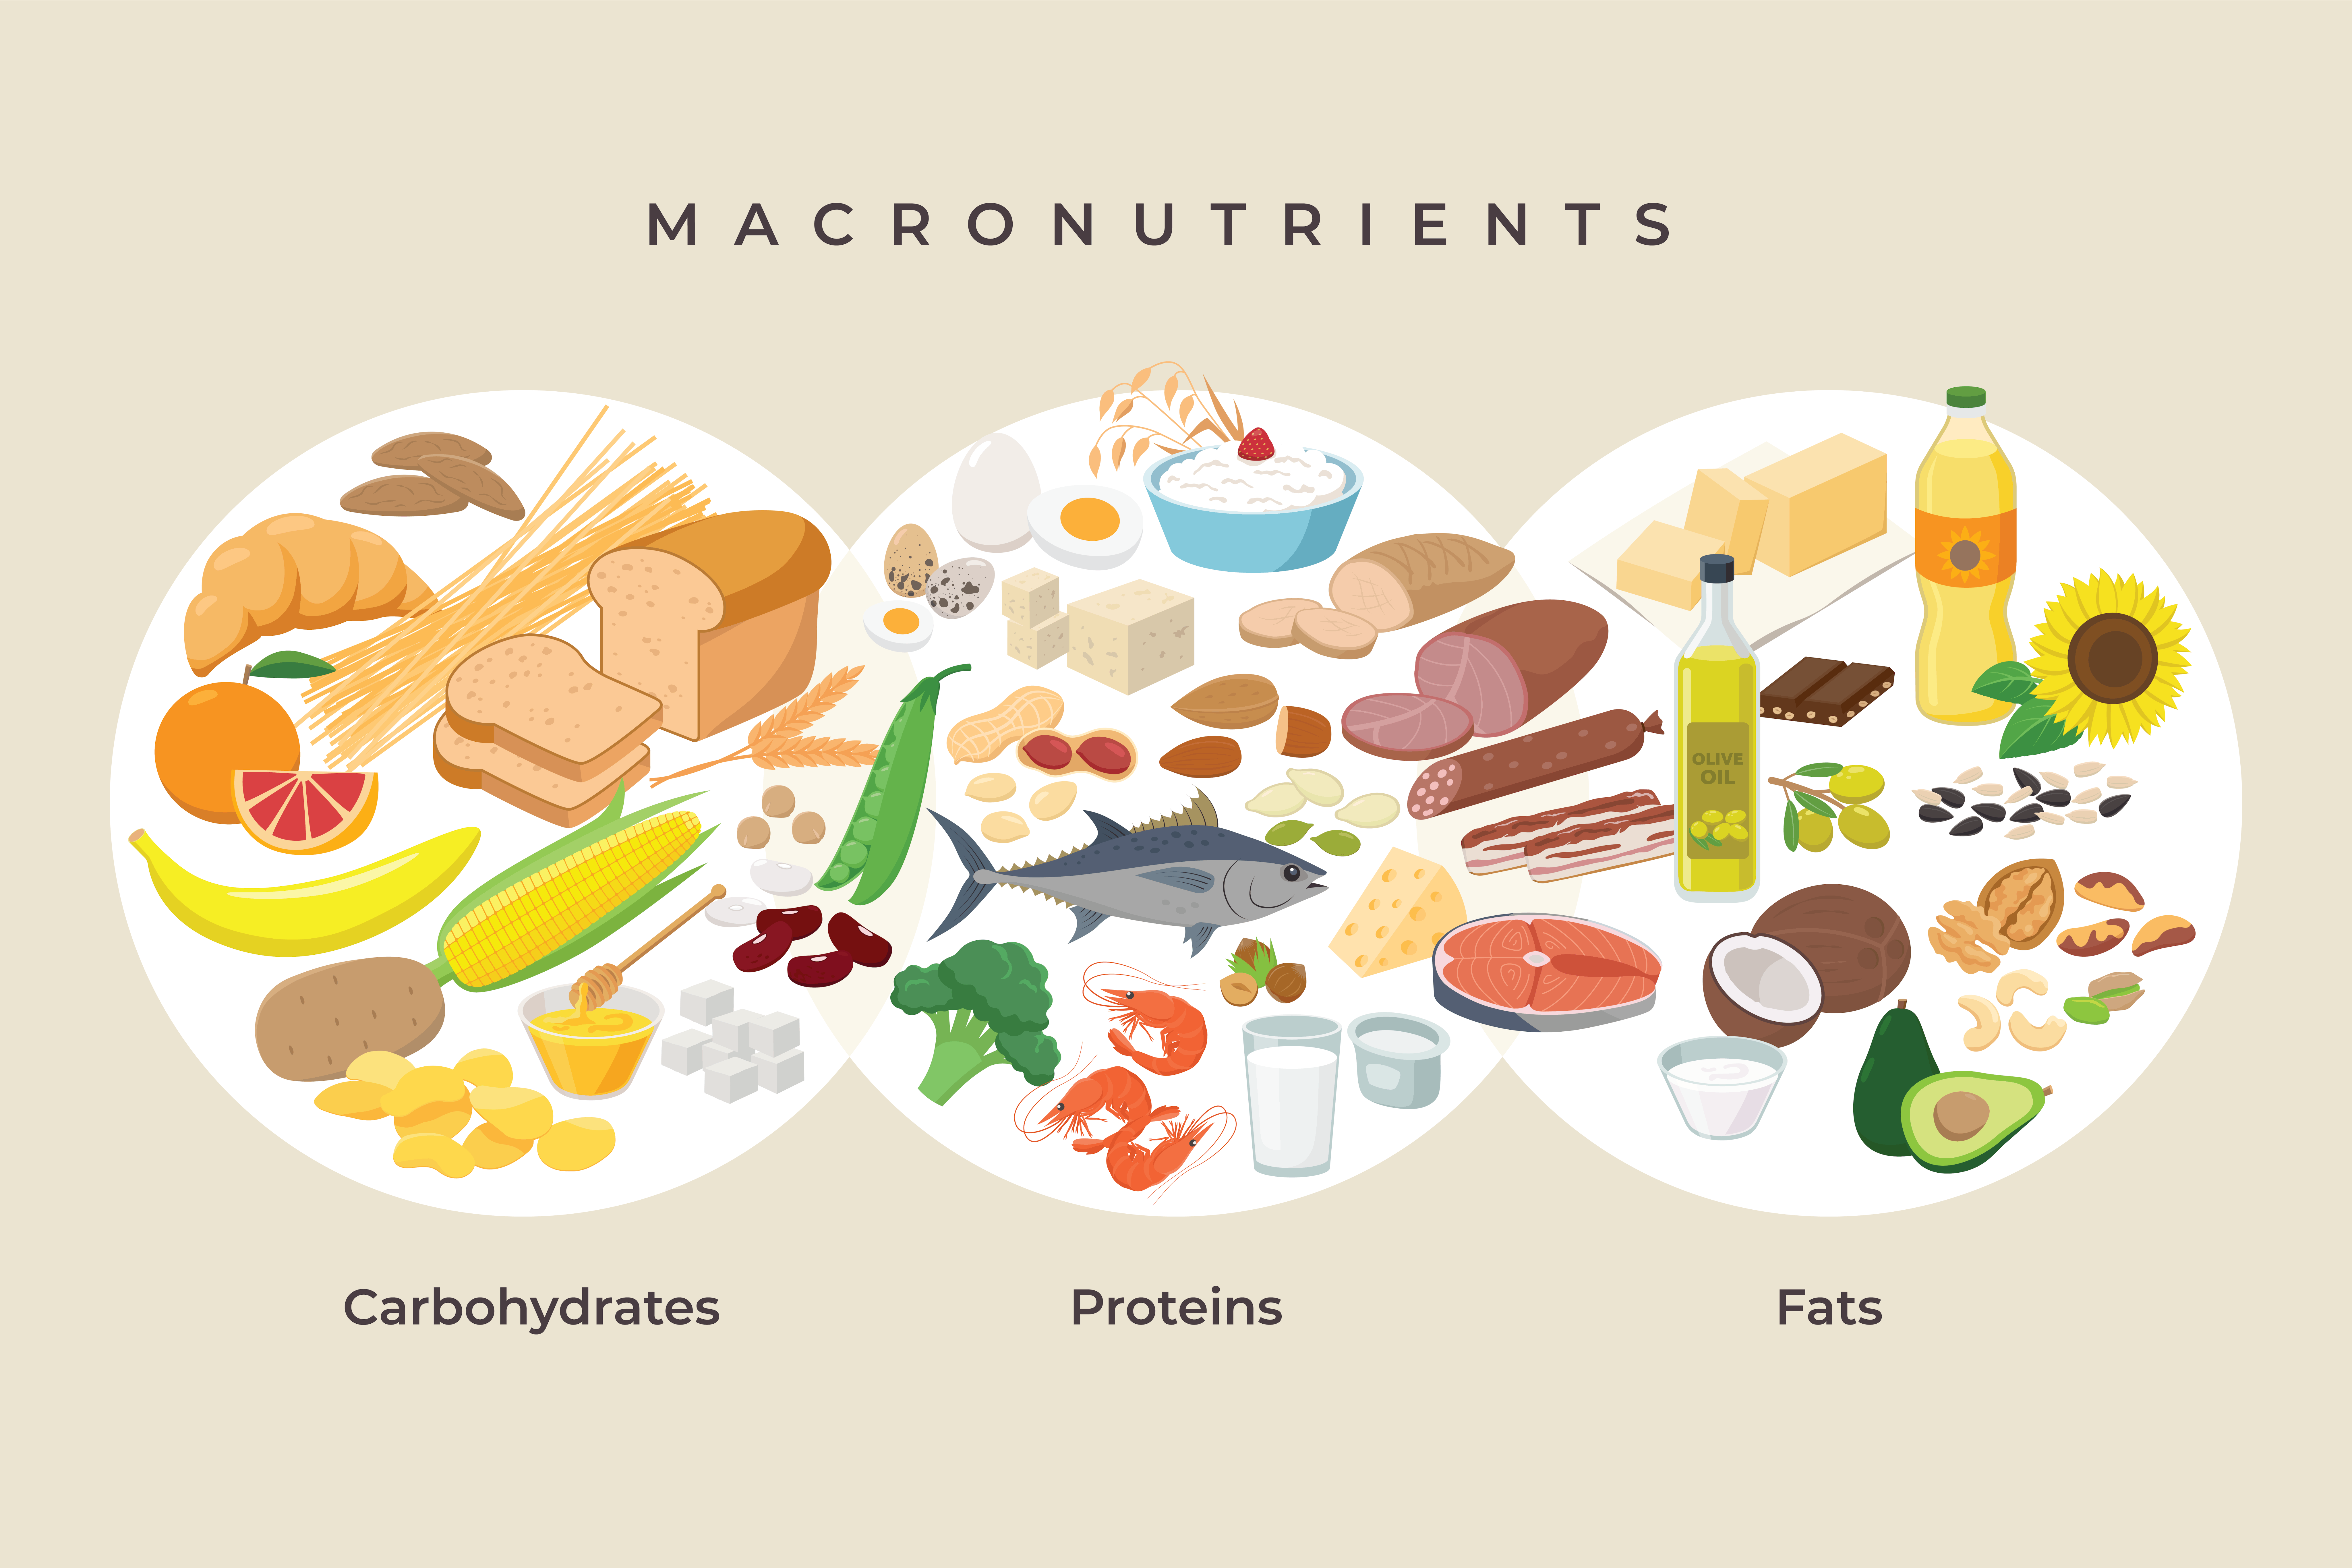 Macronutrients for health